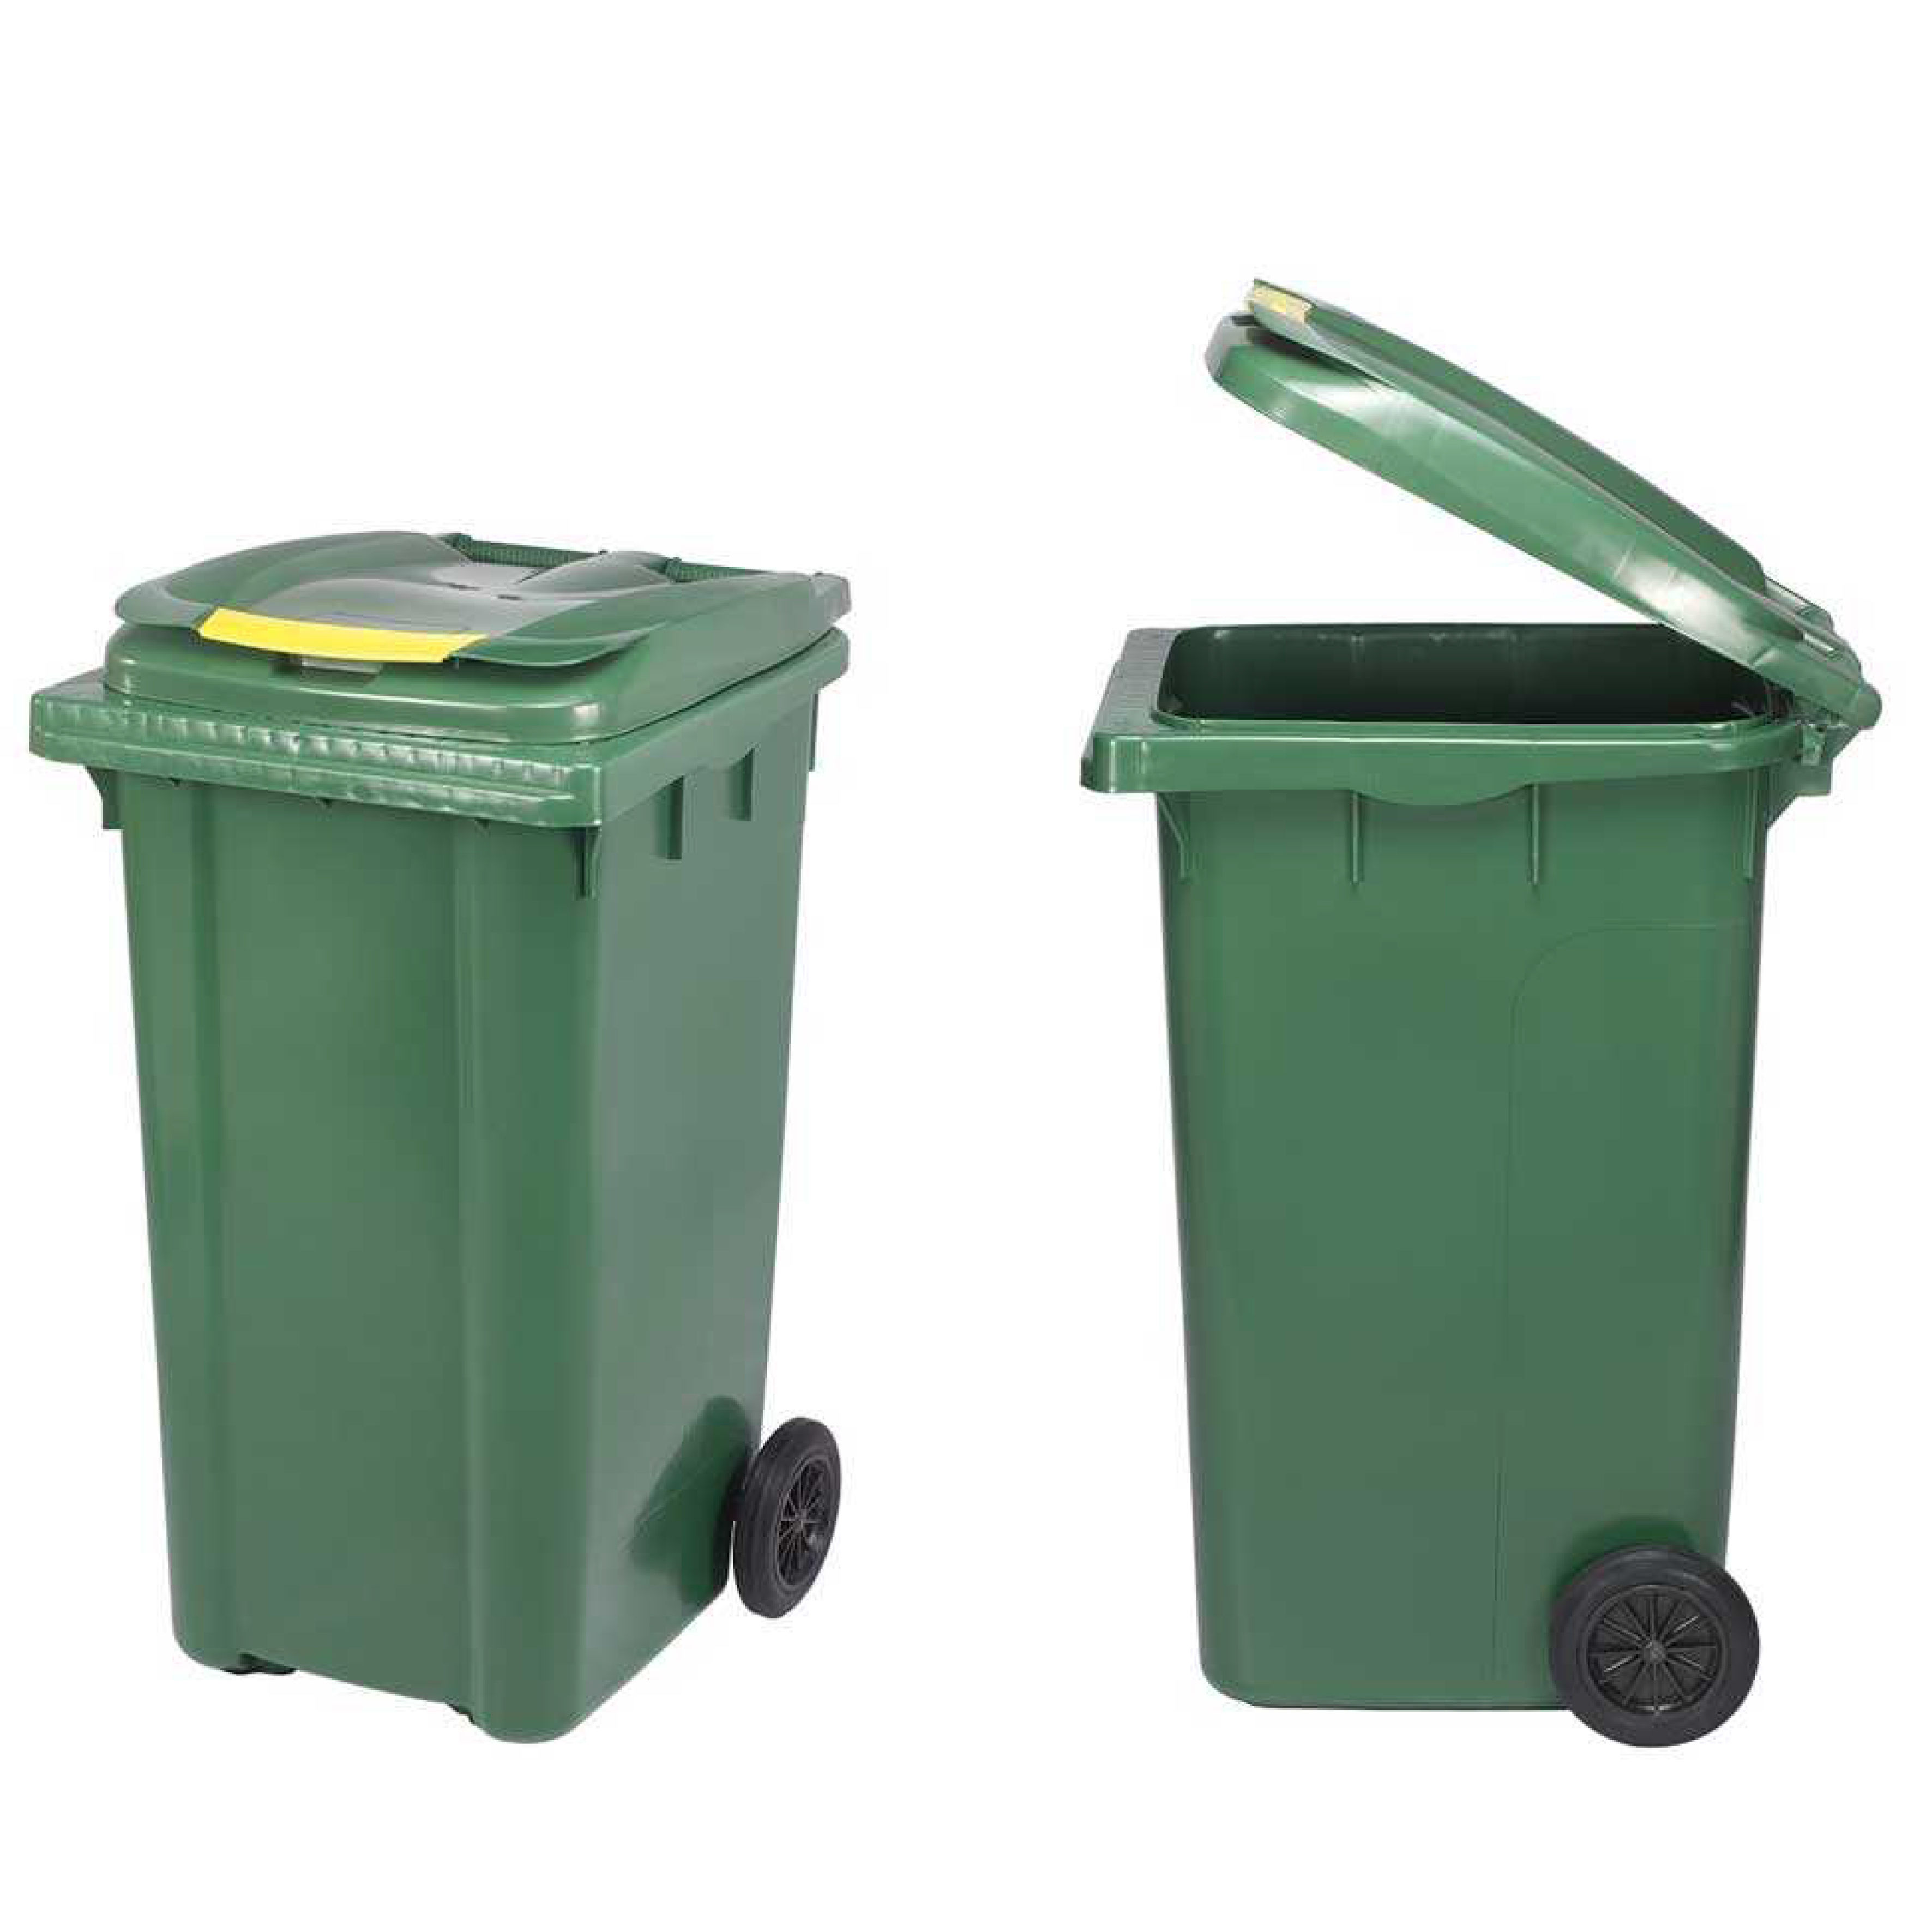 Зеленая мусорка. Мусорный бак 240л Леруа. МКТ 120 зеленый мусорный контейнер 120 л зеленый. Мусорный контейнер МКТ-240 зеленый.